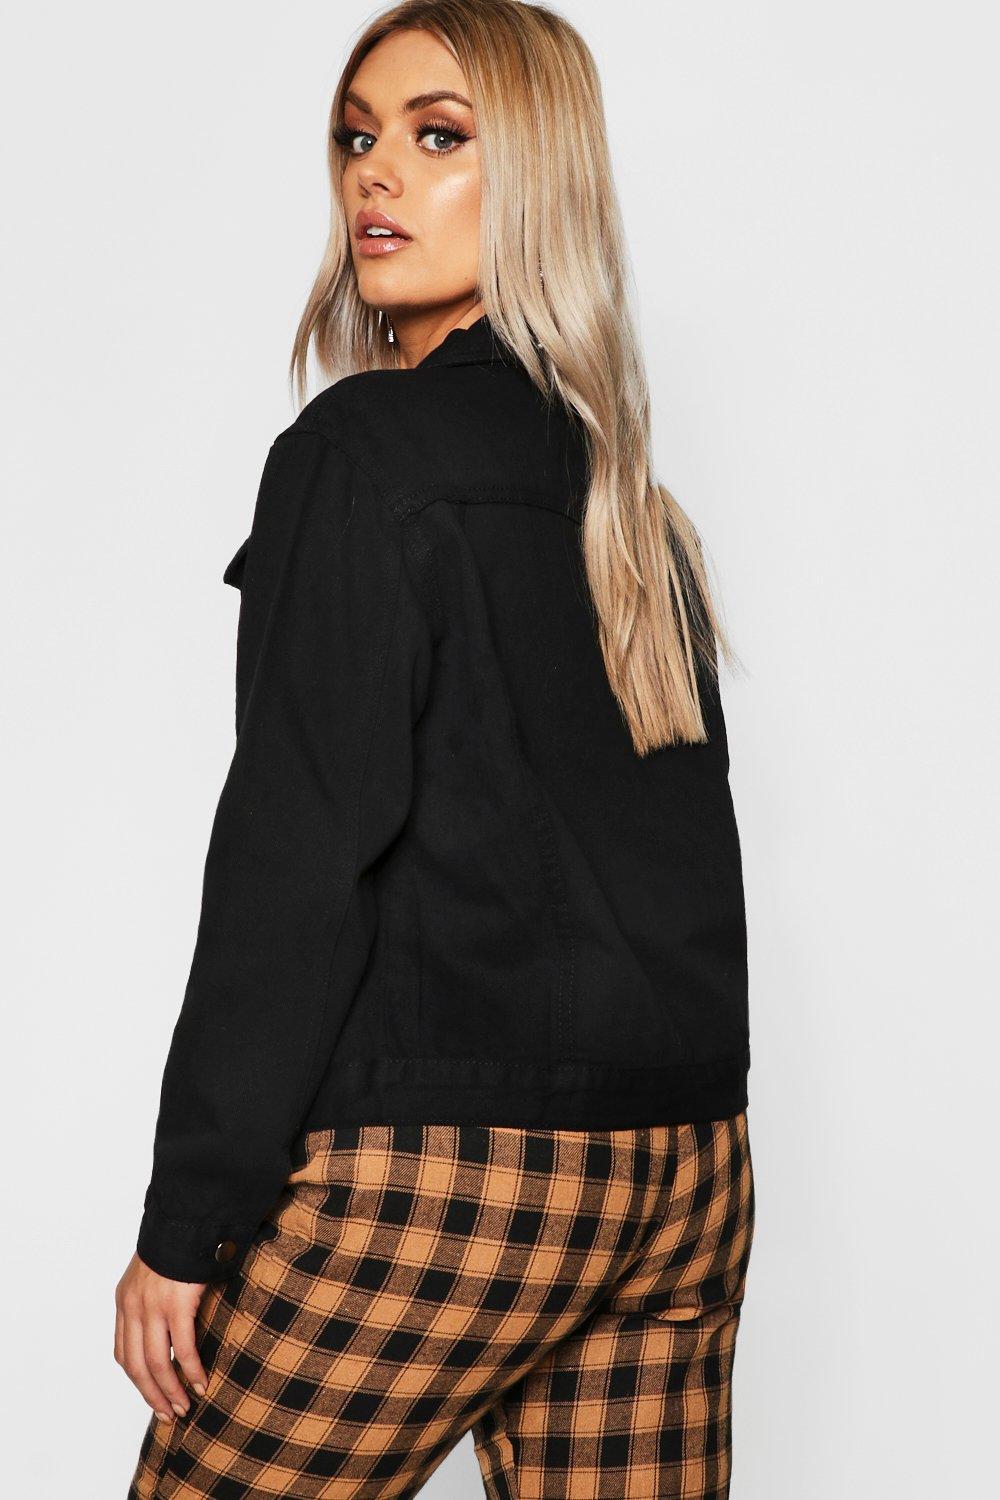 Stylish women's black denim jacket with zip closure and waist pockets